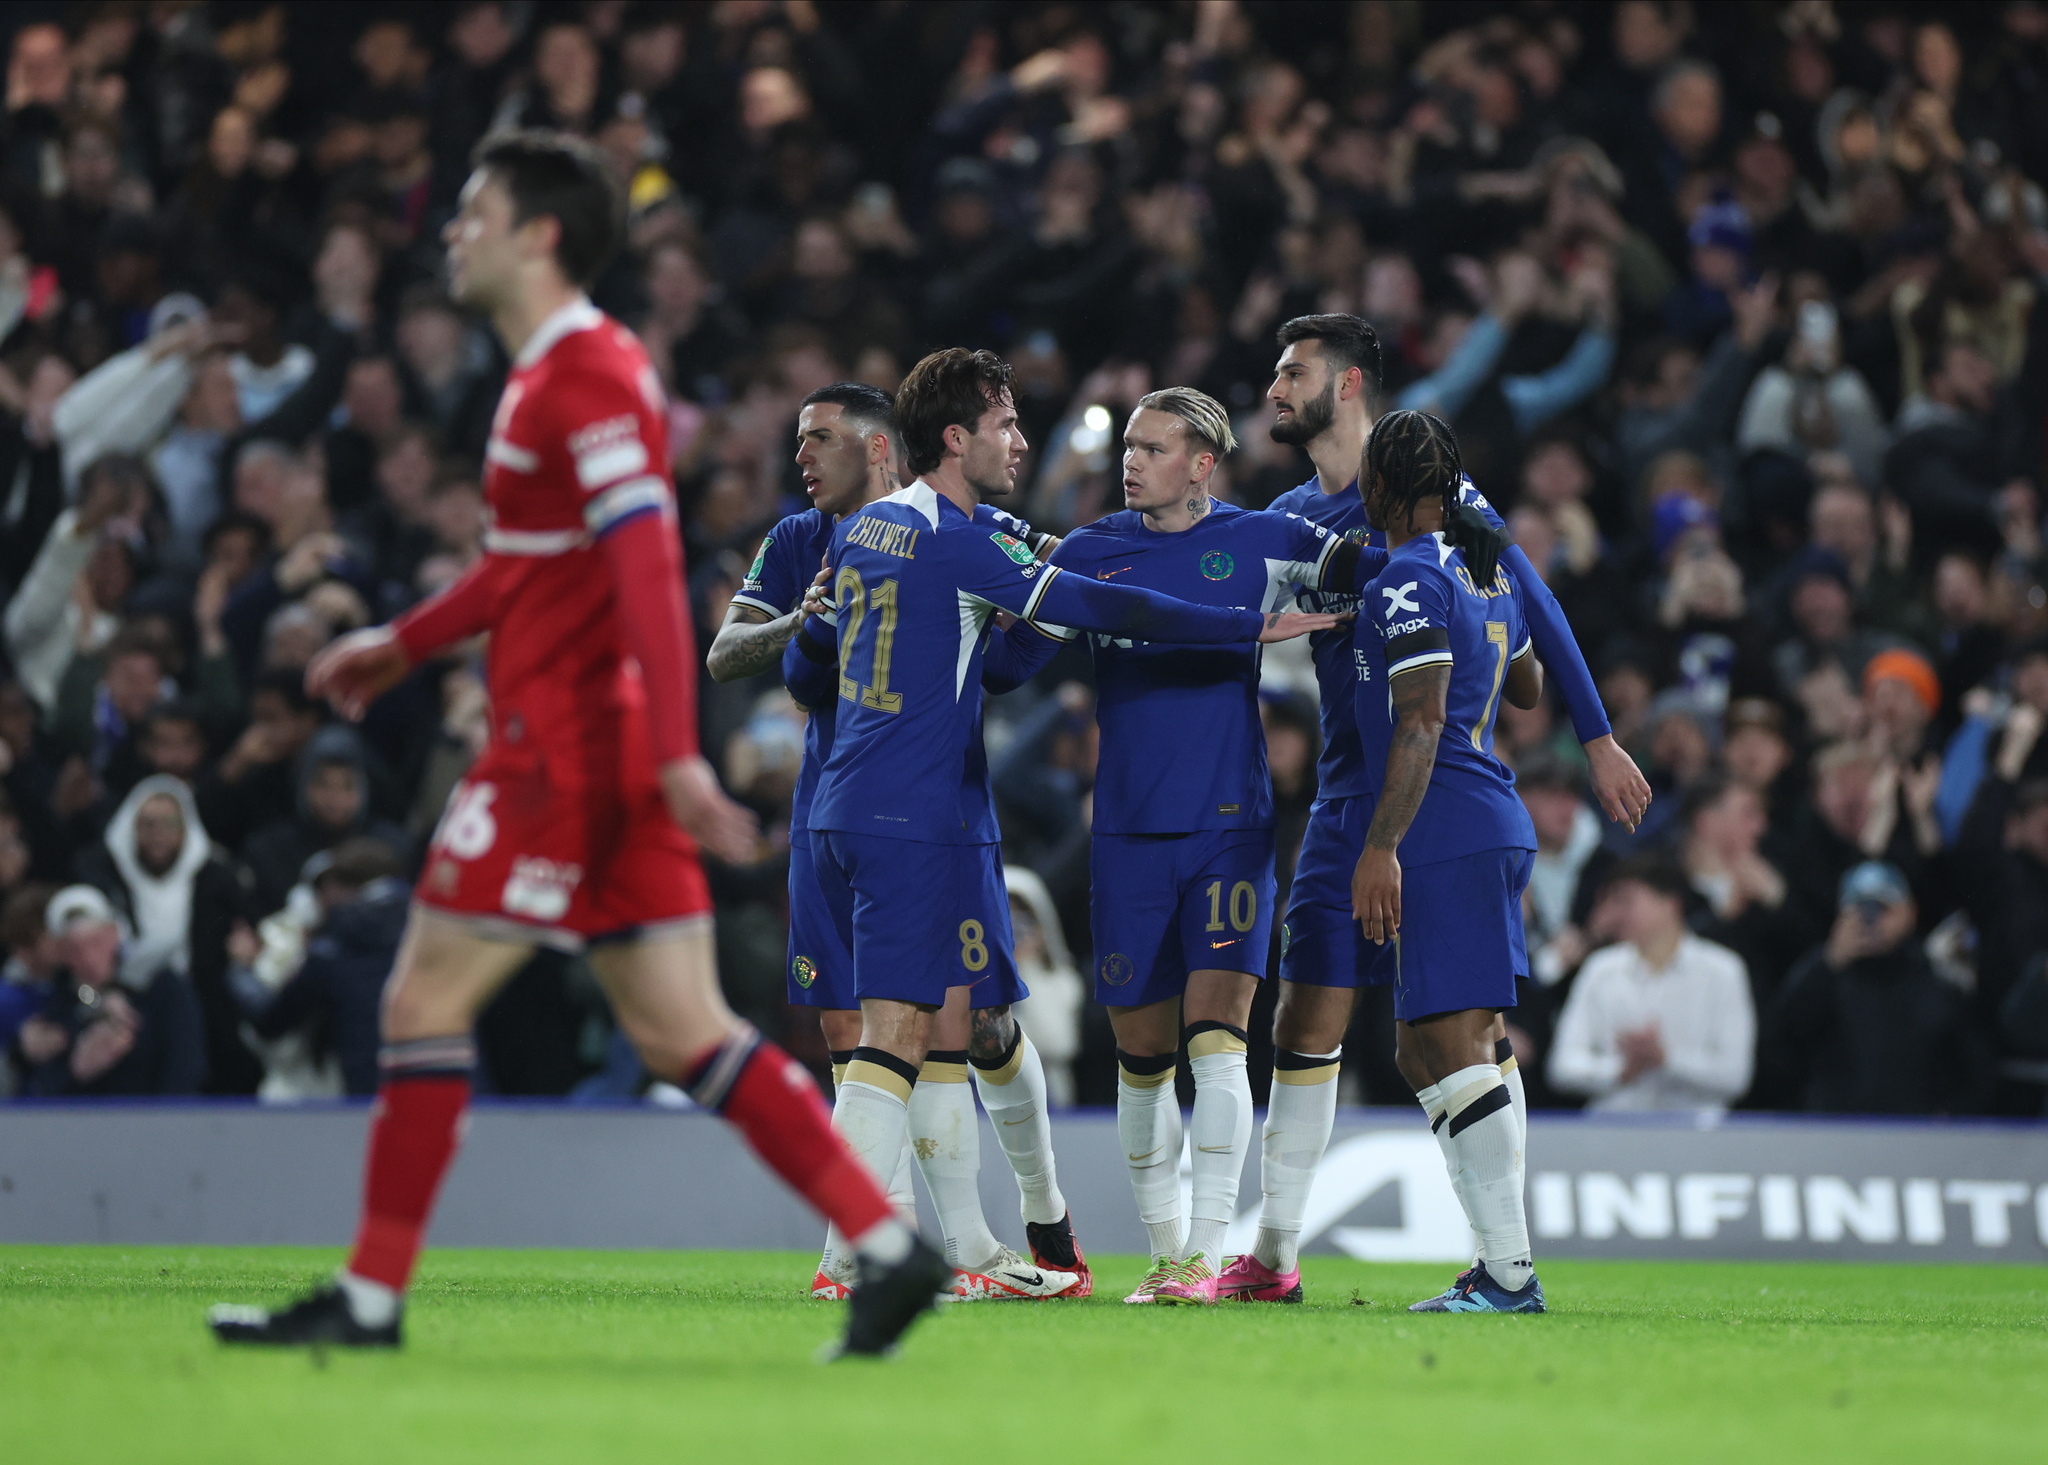 Chelsea celebrates scoring the opening goal